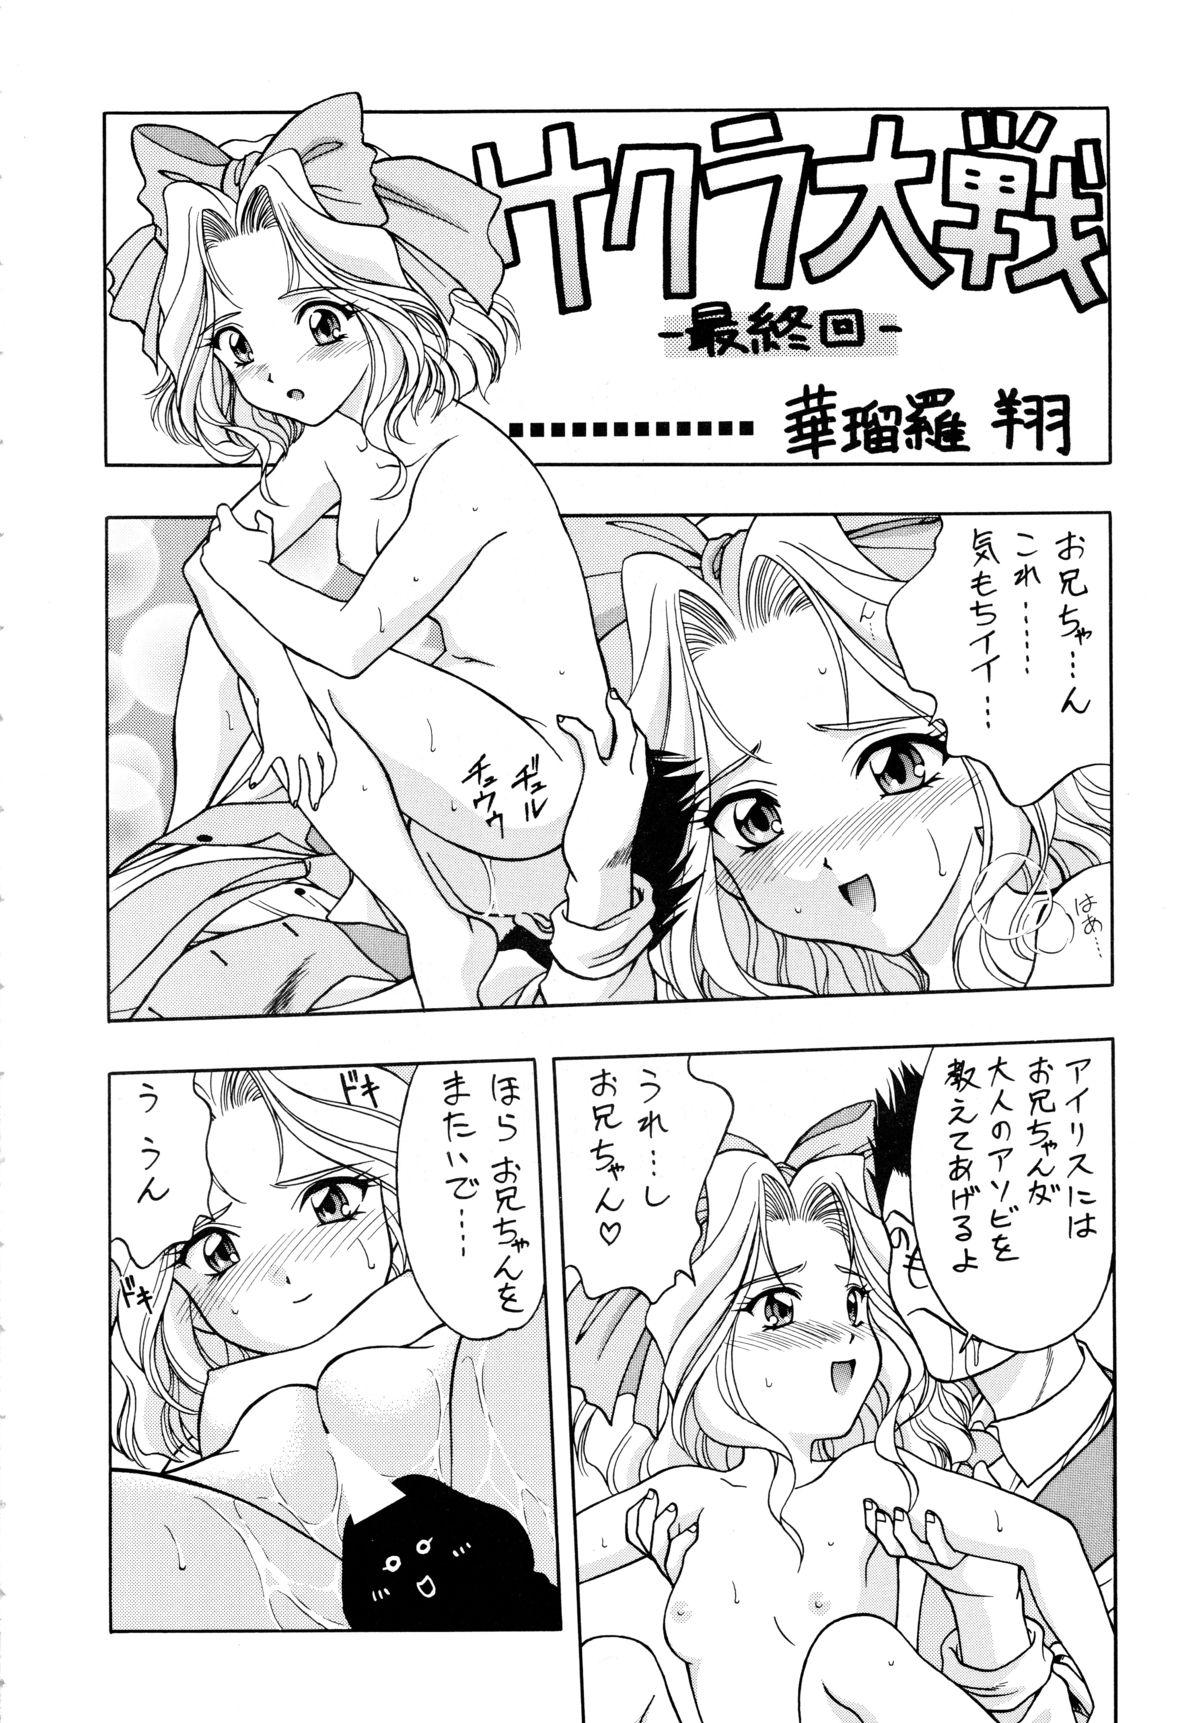 Stepsis LOVE² BREATH - Sakura taisen Martian successor nadesico Tokimeki memorial Youre under arrest Pounded - Page 4